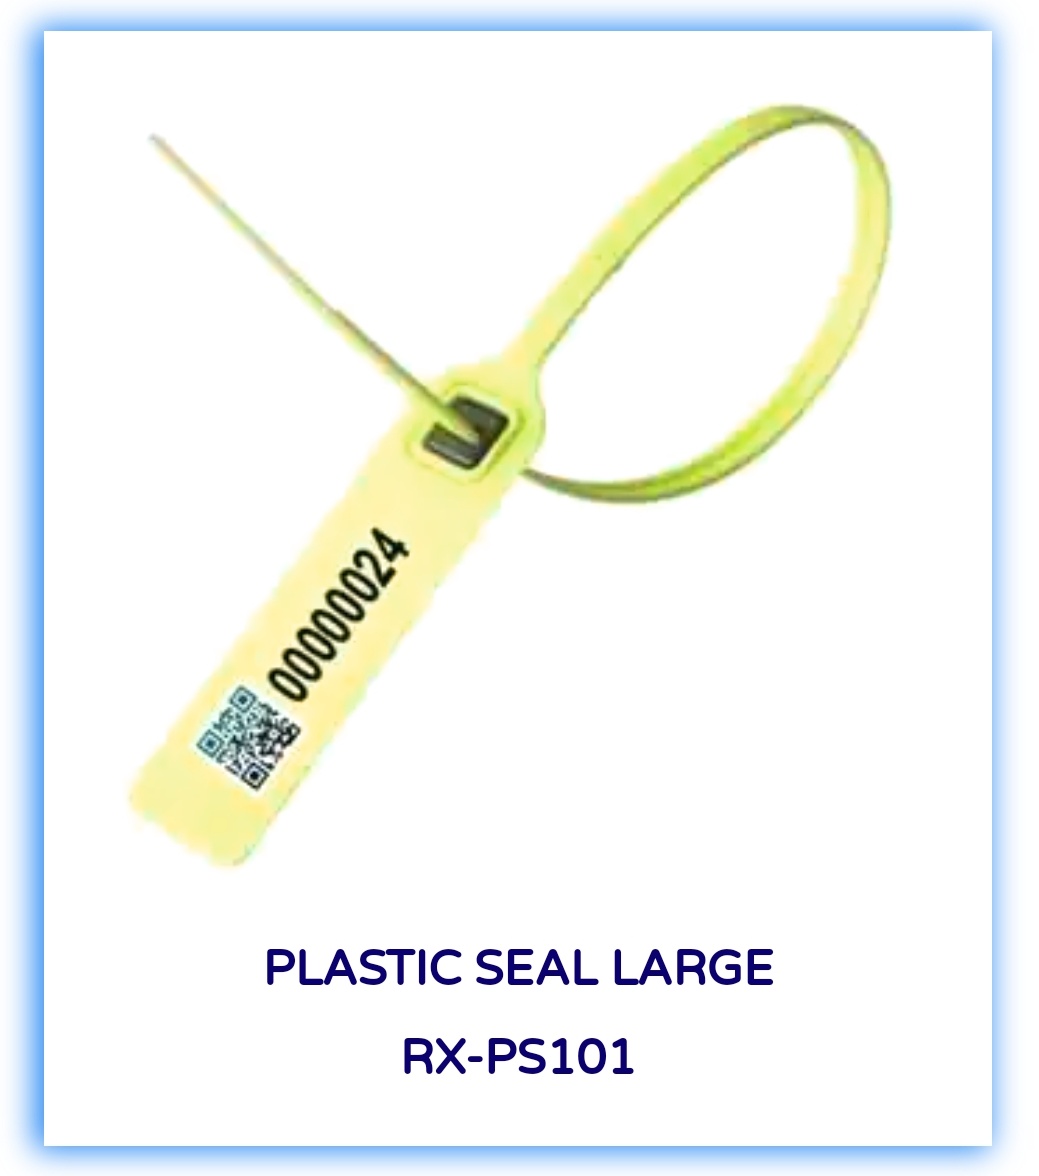 Plastic Tag Security Seals at Best Price in India